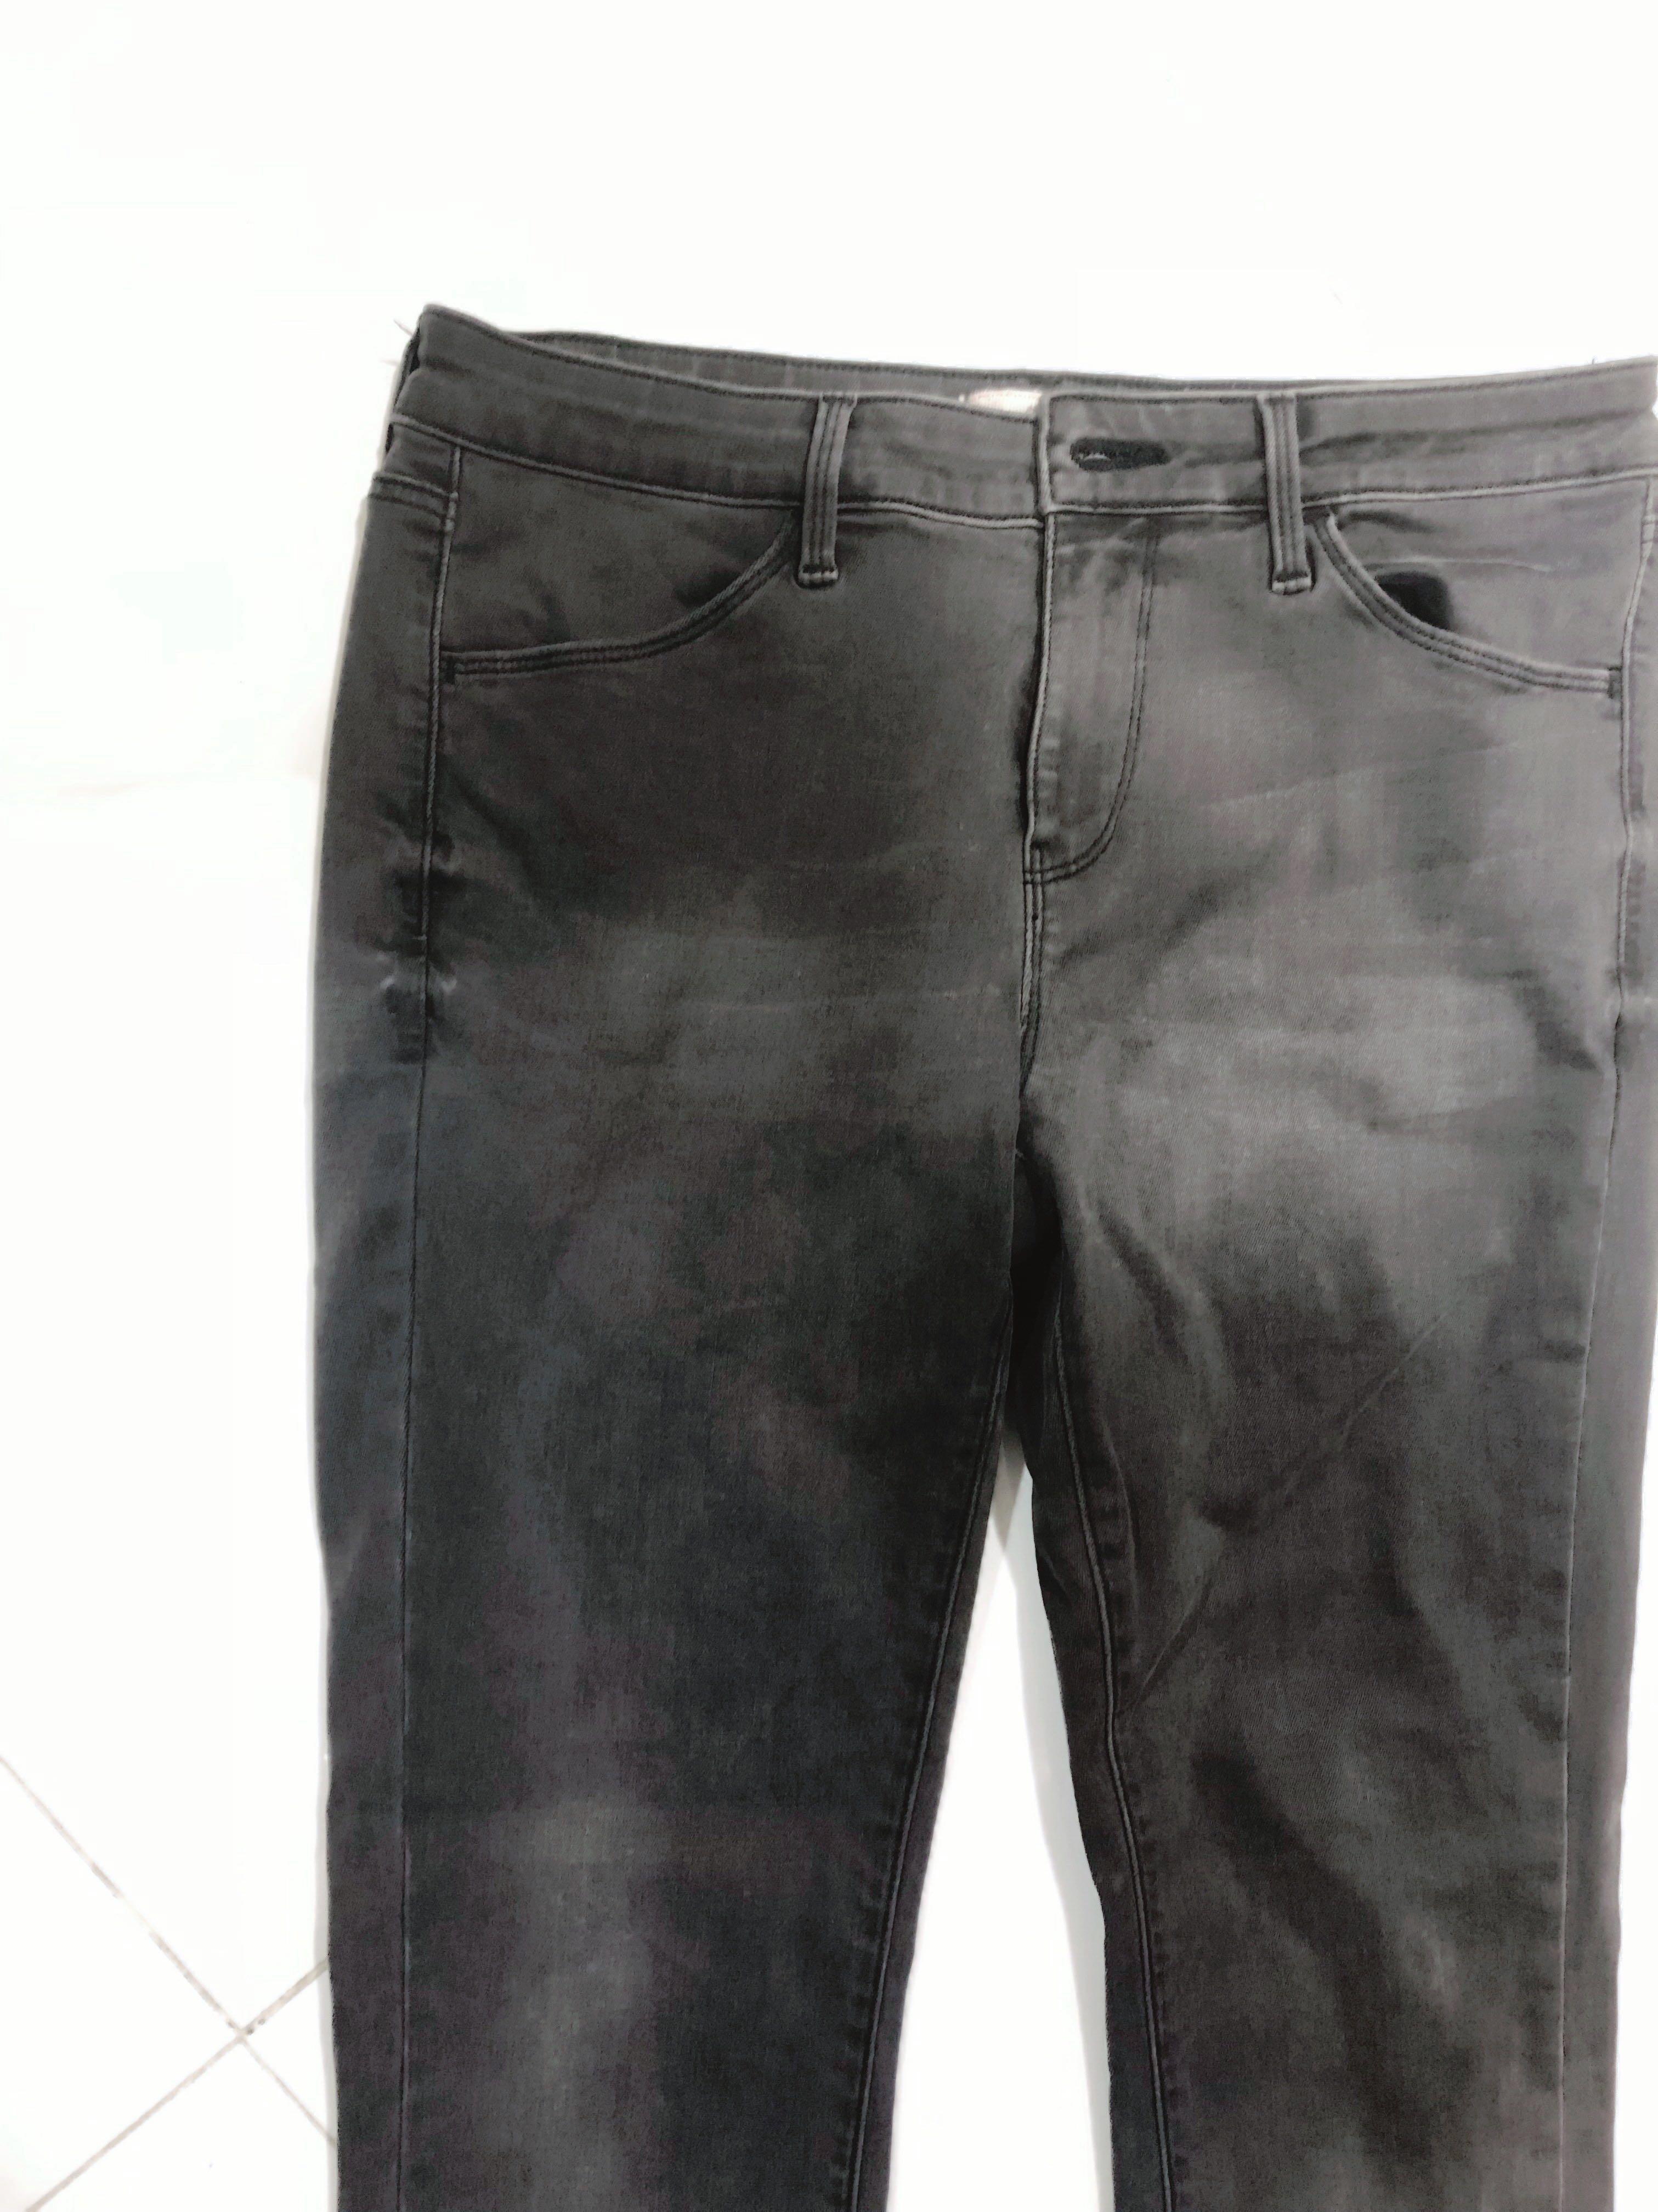 Uniqlo] Size 27 Dark Grey Jeans, Women 